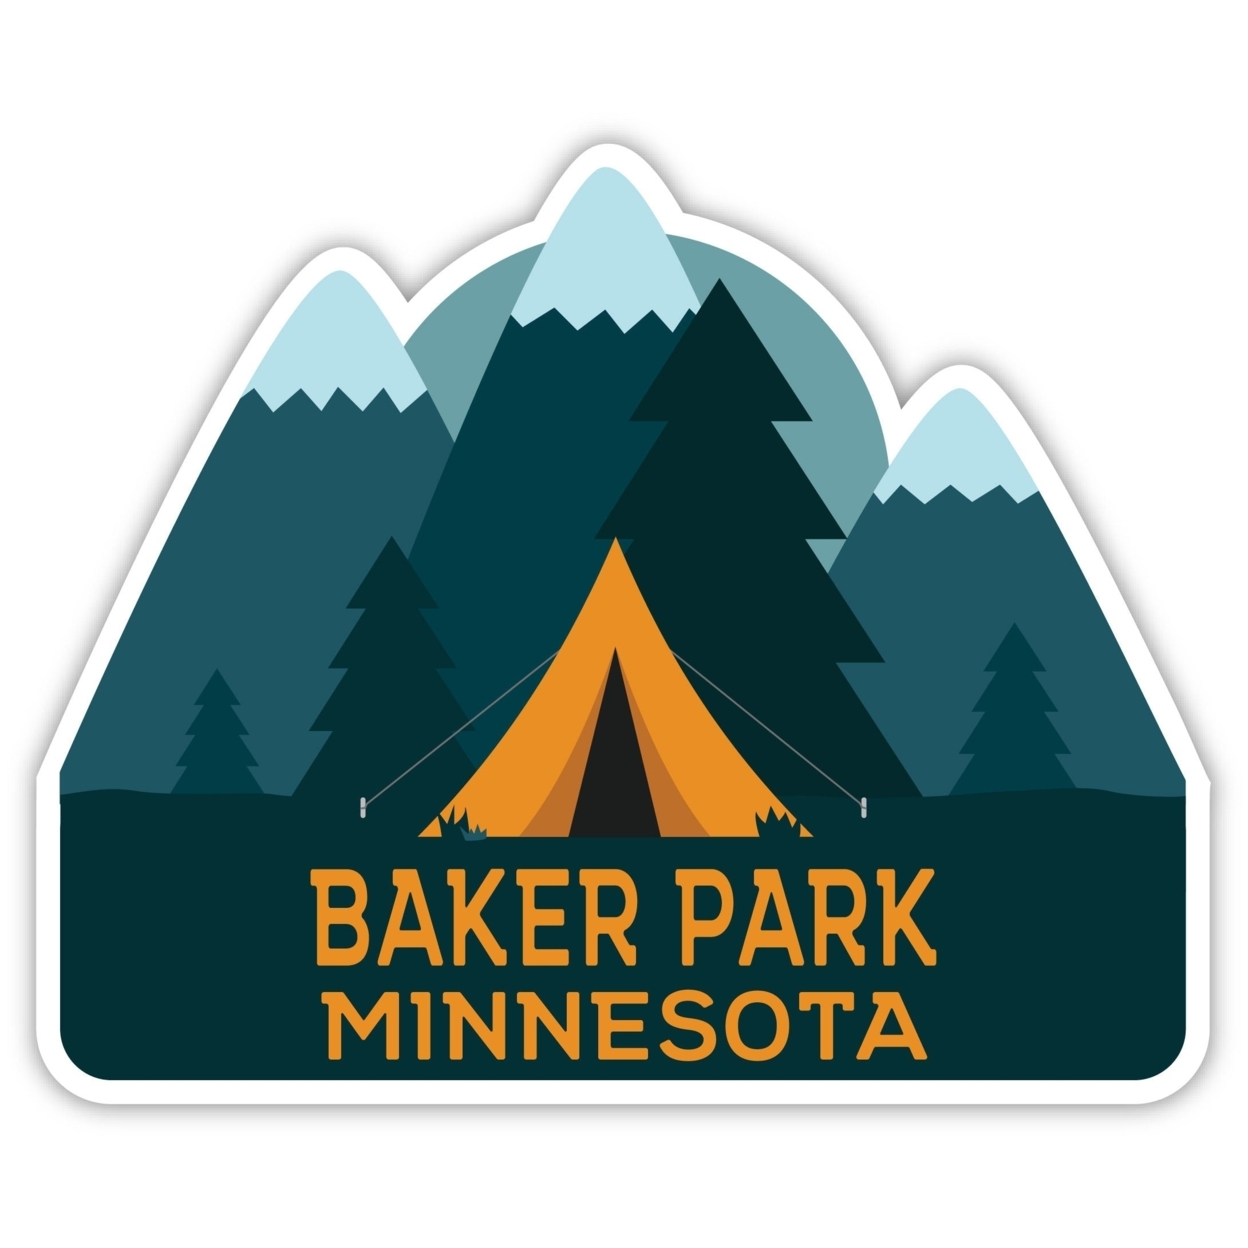 Baker Park Minnesota Souvenir Decorative Stickers (Choose Theme And Size) - 4-Pack, 12-Inch, Tent